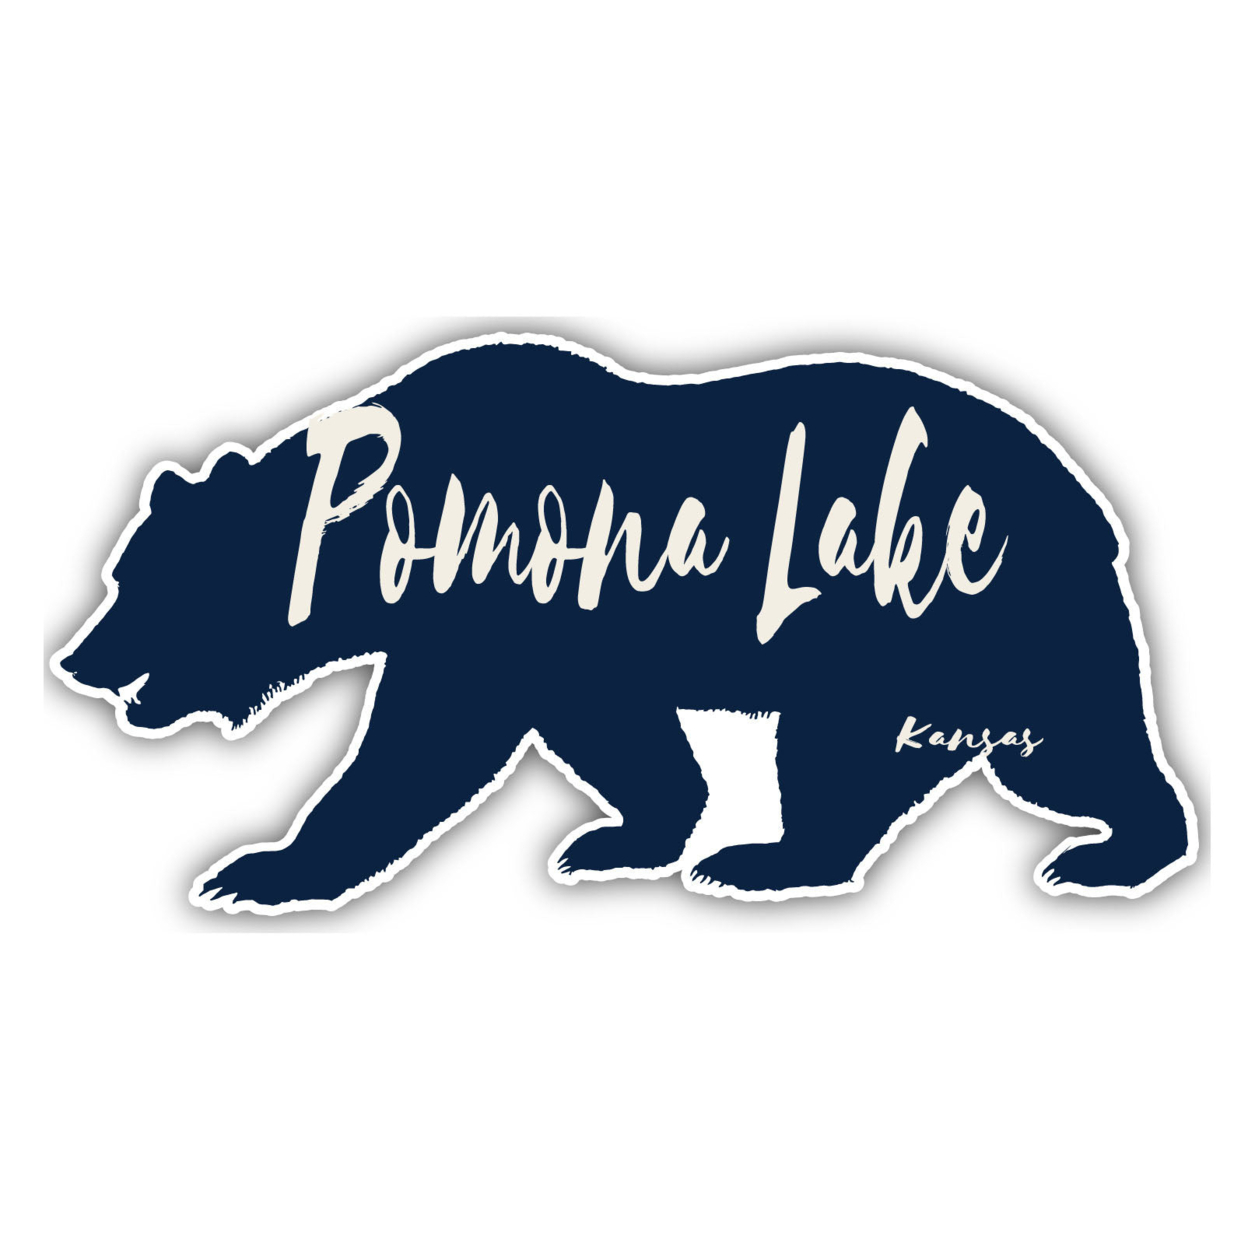 Pomona Lake Kansas Souvenir Decorative Stickers (Choose Theme And Size) - Single Unit, 4-Inch, Great Outdoors